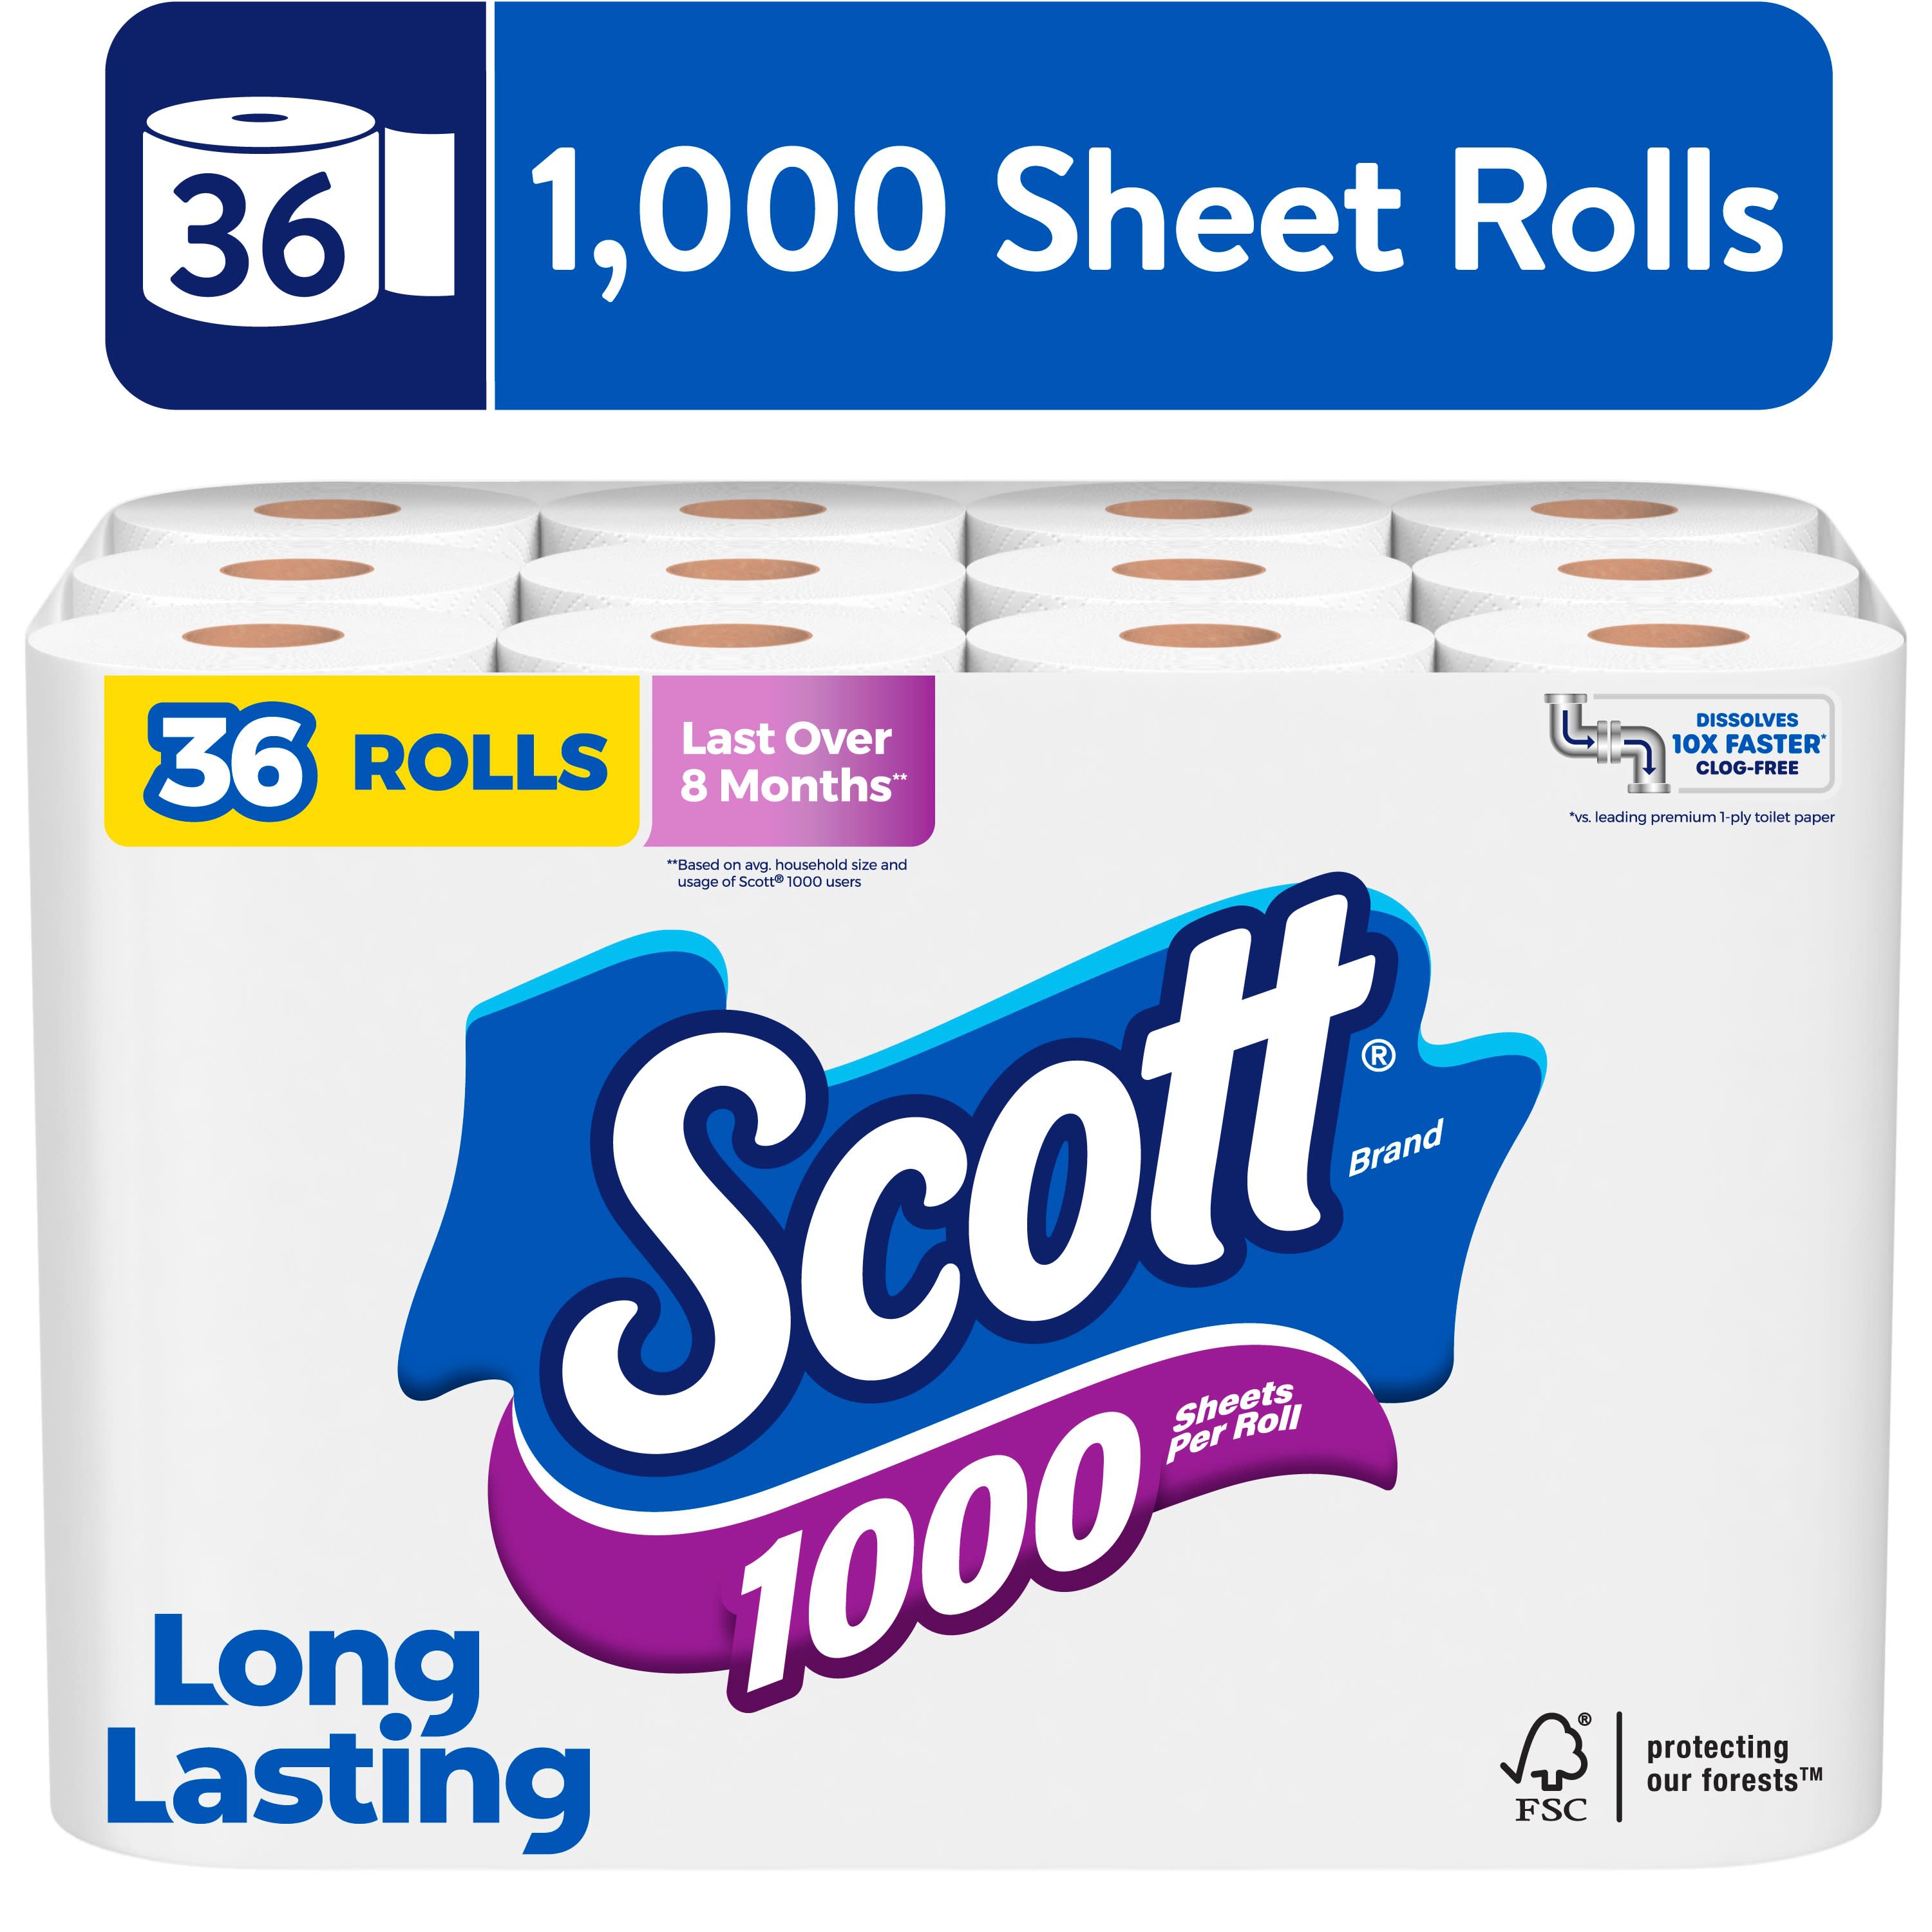 Scott 1000 Toilet Paper, 36 Rolls, 1,000 Sheets per Roll - image 1 of 12